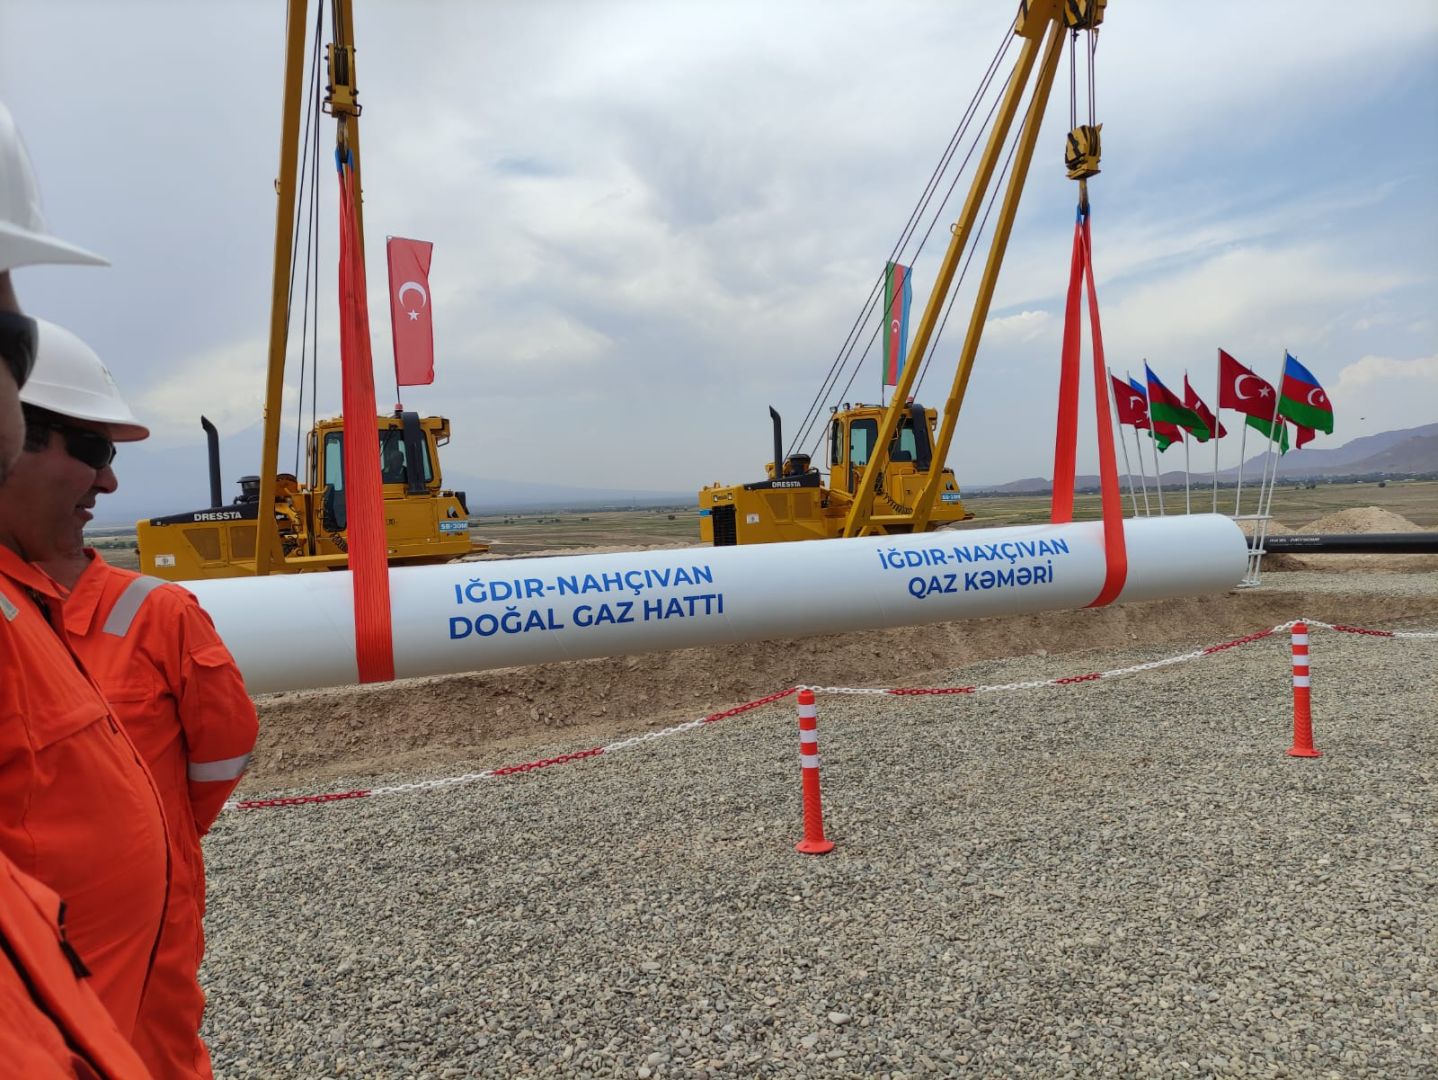 Turkiye looking to complete Ighdır-Nakhchivan Natural Gas Pipeline project